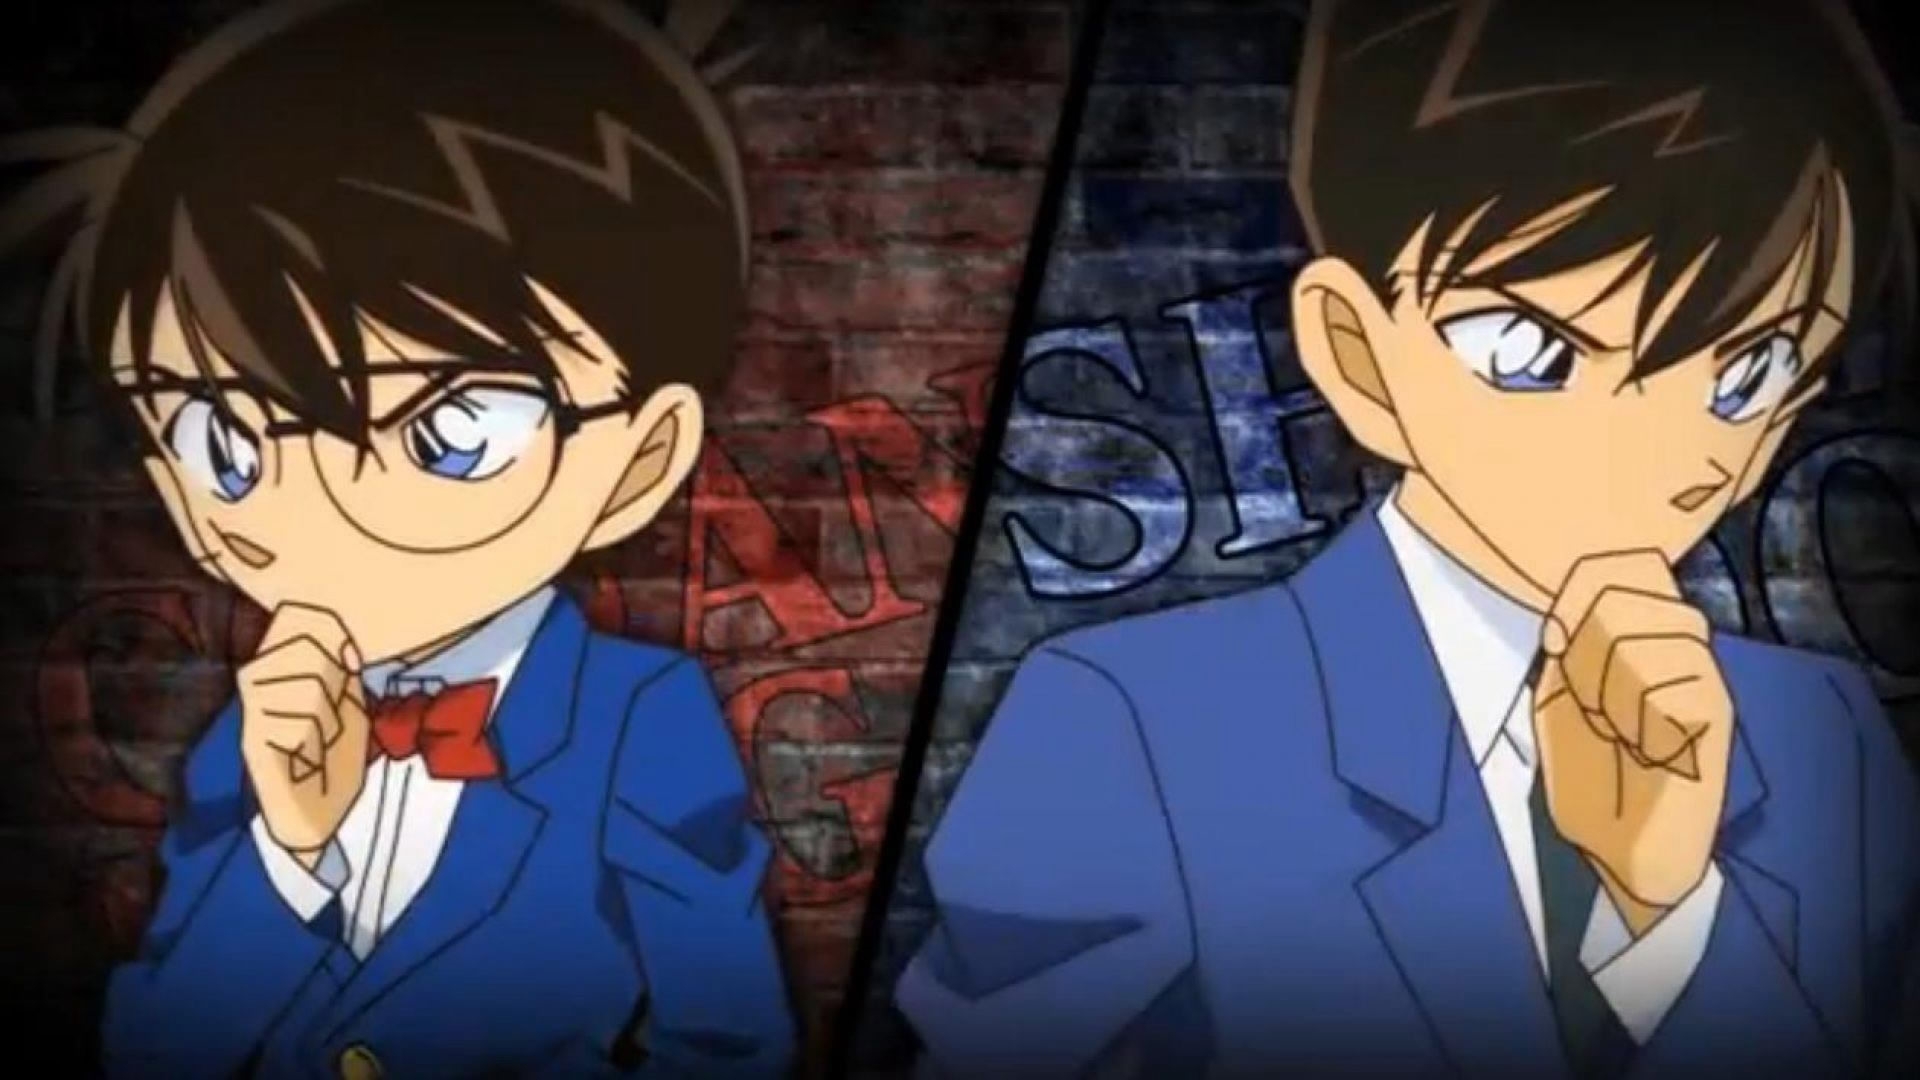 The return of “Detective Conan” leads to nostalgia - CGTN